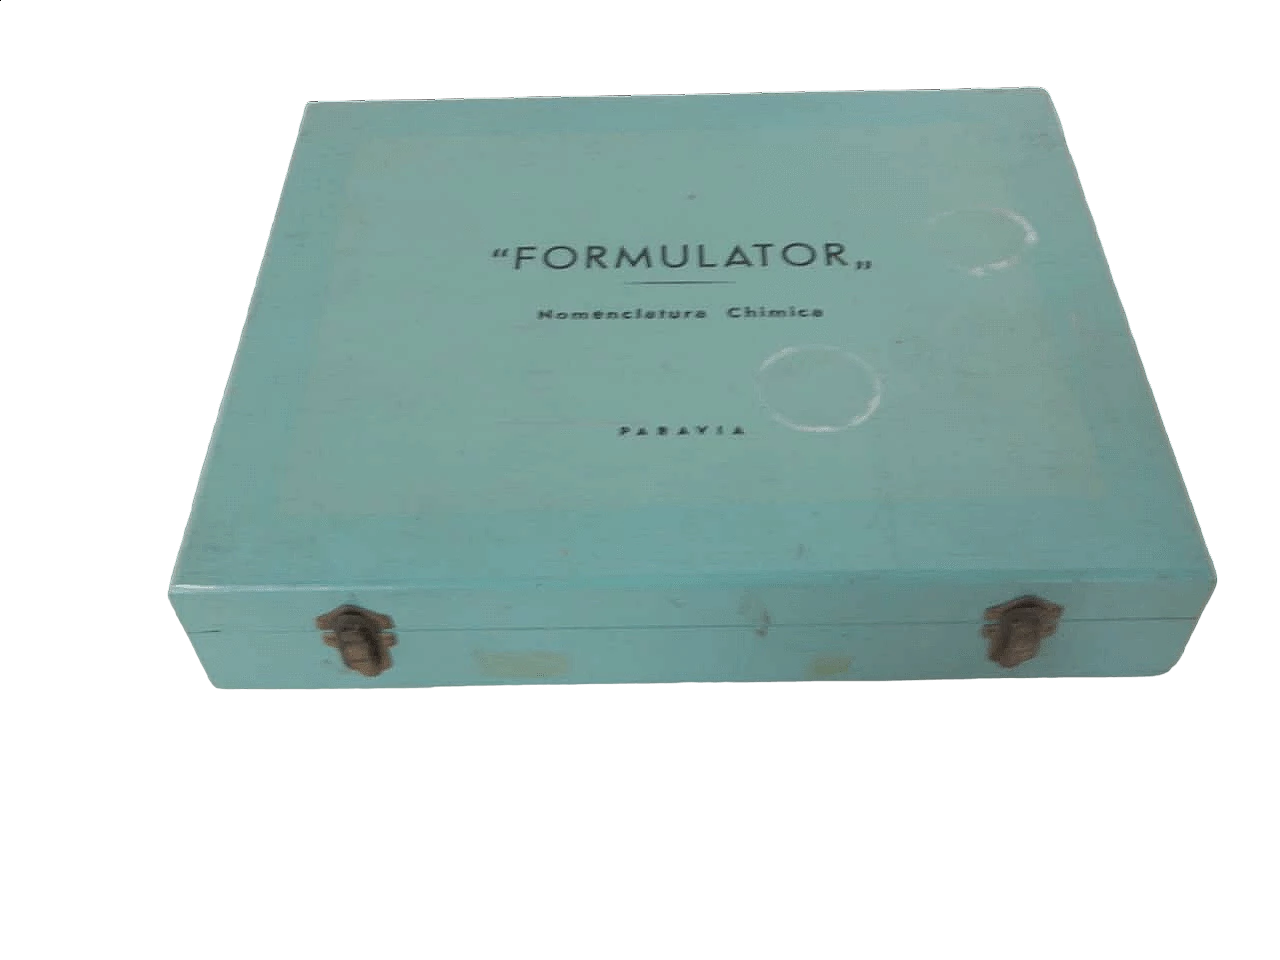 Formulator chemical nomenclature box for Paravia, 1948 13